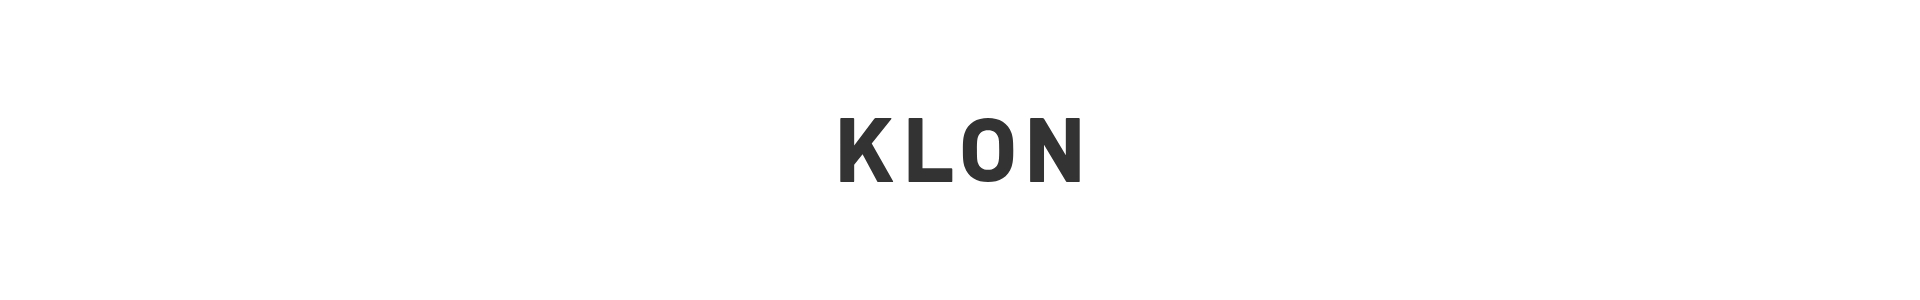 KLON CREATIVE CONTESTKLON CREATIVE CONTEST～デザイン制作事例1